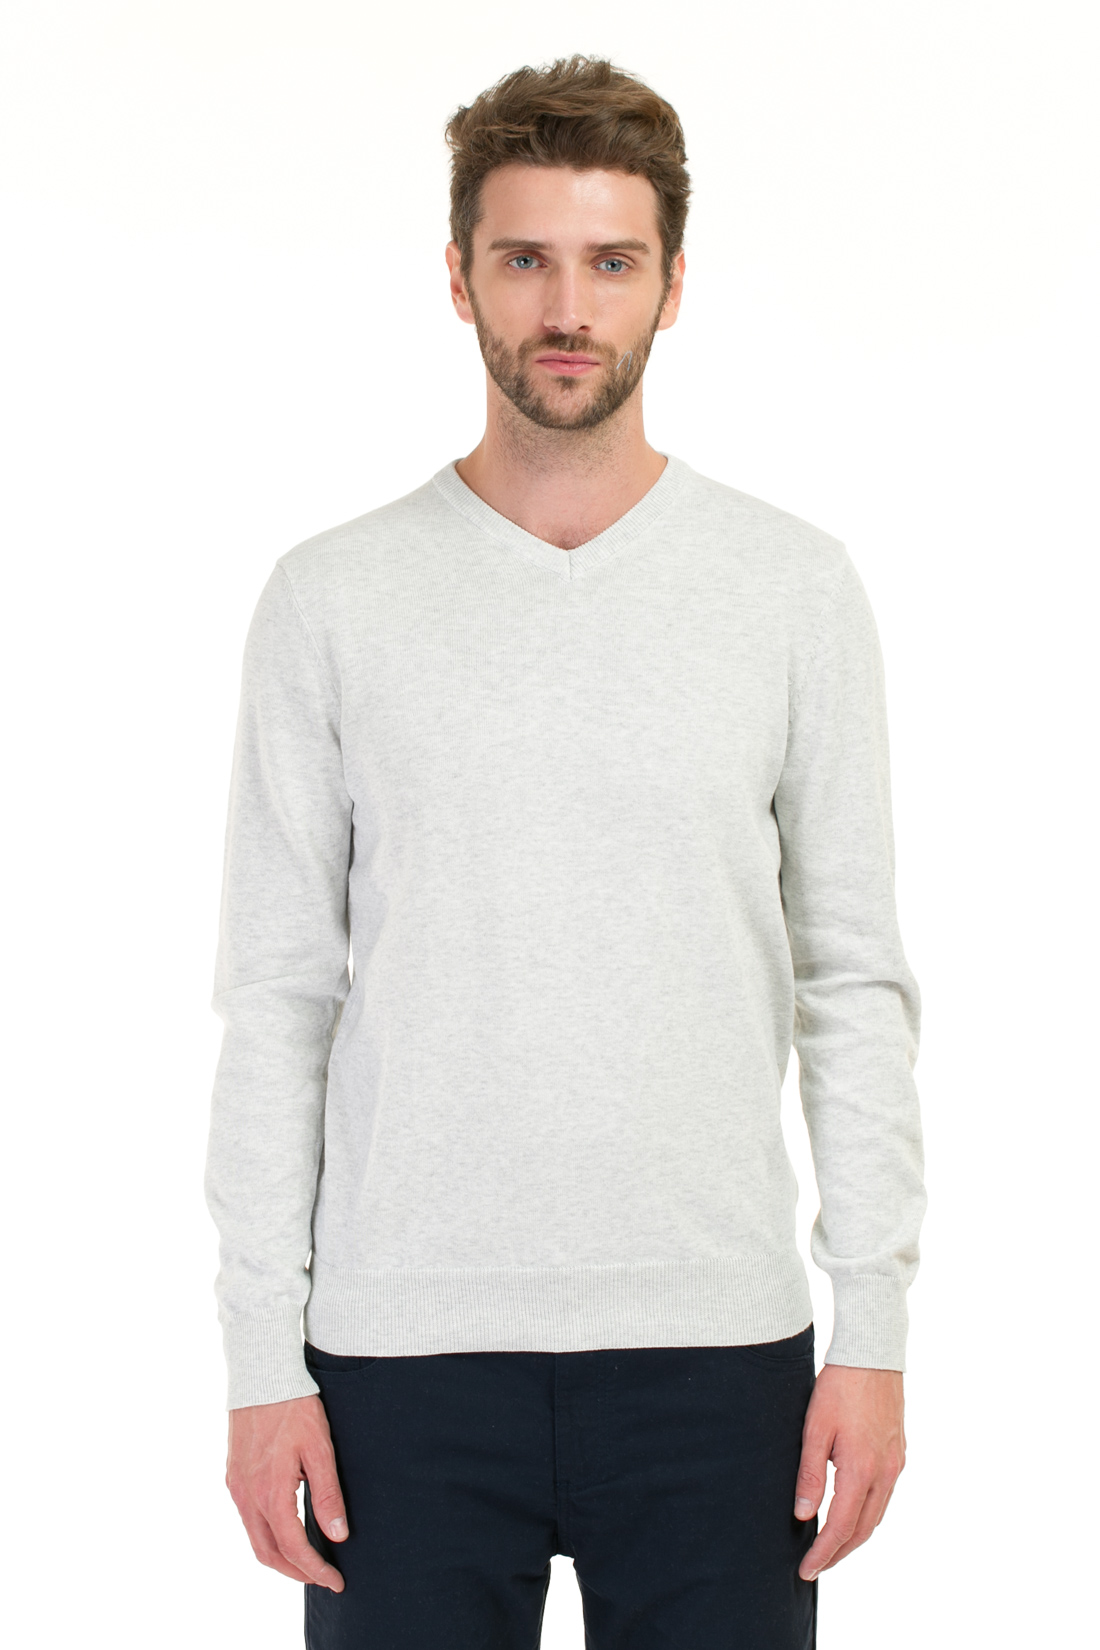 Базовый пуловер (арт. baon B637202), размер L, цвет light grey melange#серый Базовый пуловер (арт. baon B637202) - фото 1